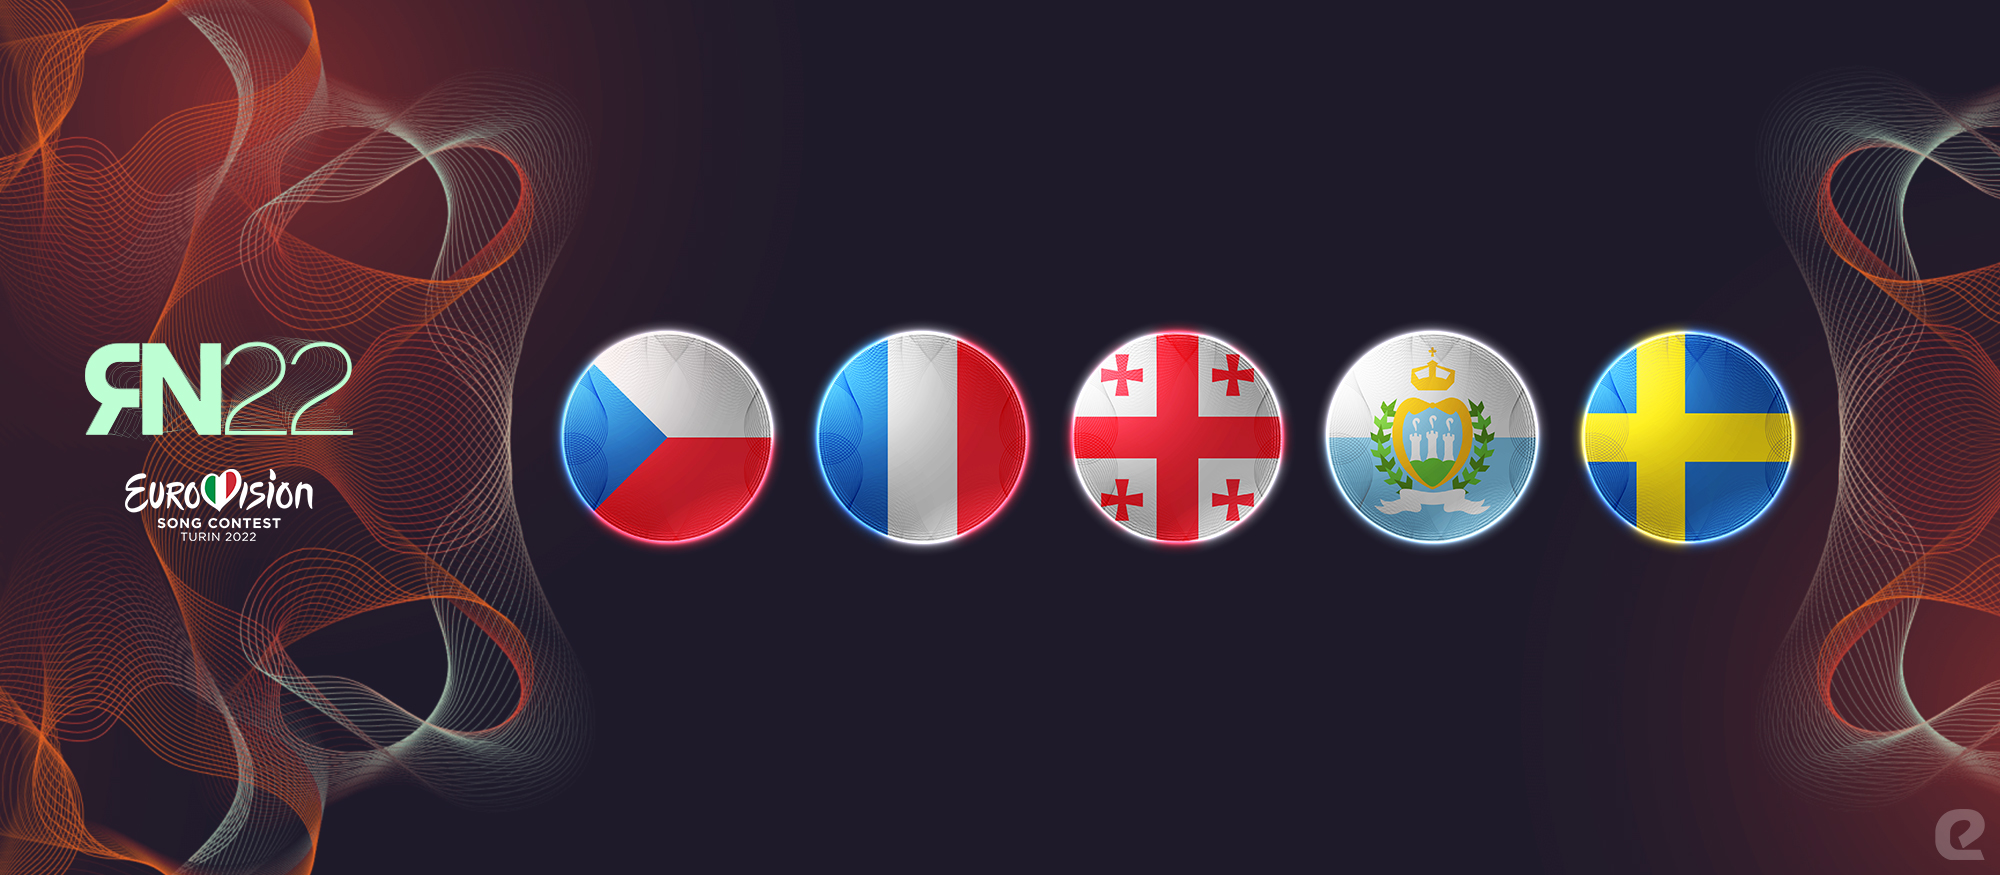 Razmišljamo naglas Eurosong 2022. eurosong.hr Češka Francuska Gruzija San Marino Švedska